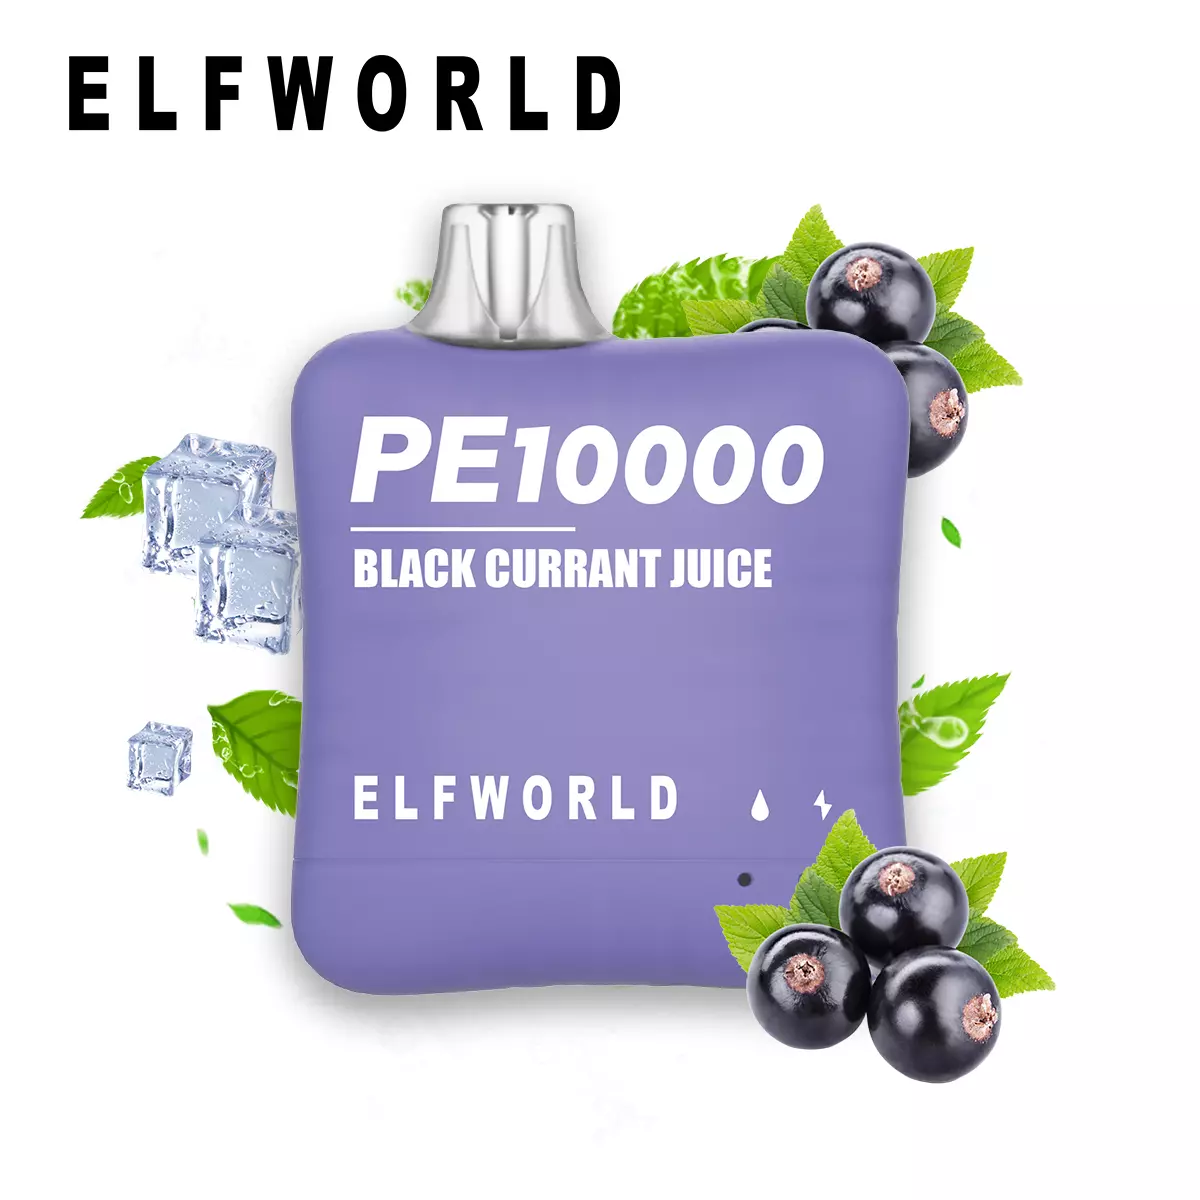 Elf World PE 10000 Black Currant Juice